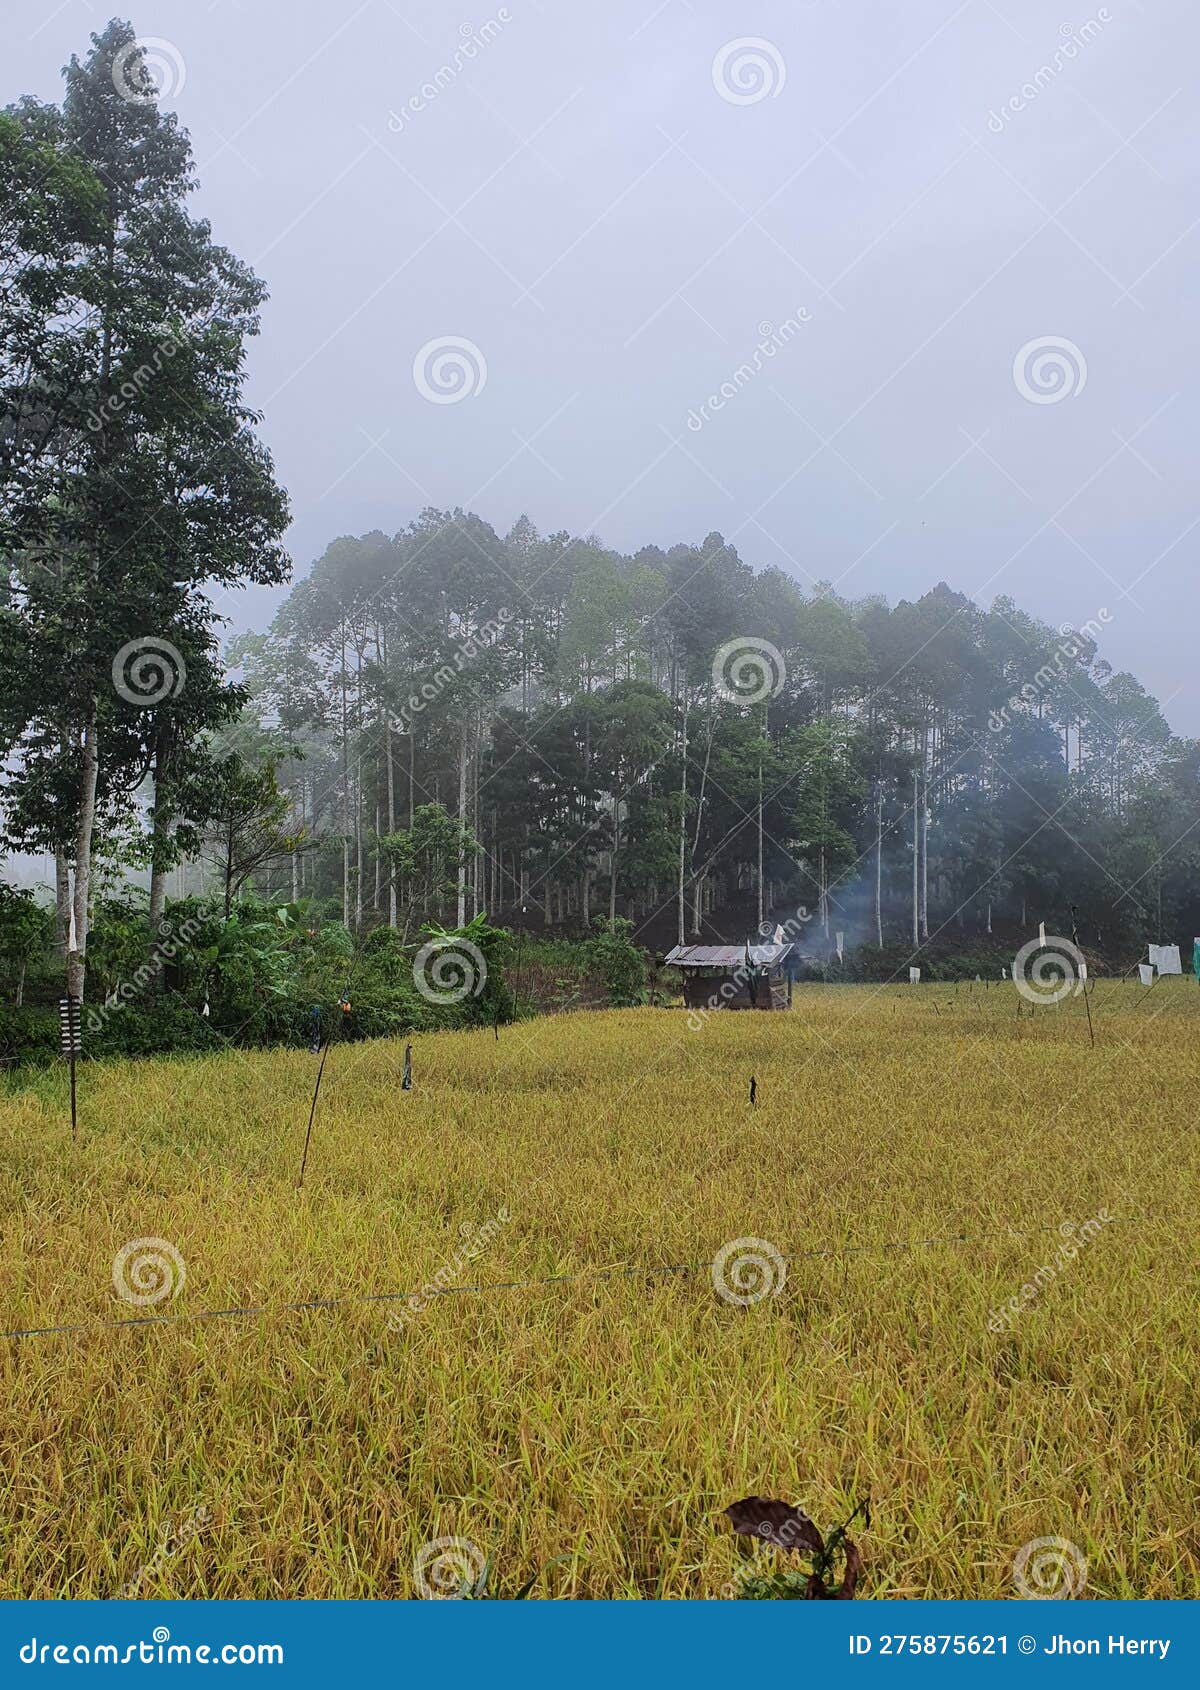 rice fields near the coffee plantation in sukamaju village, pagar alam